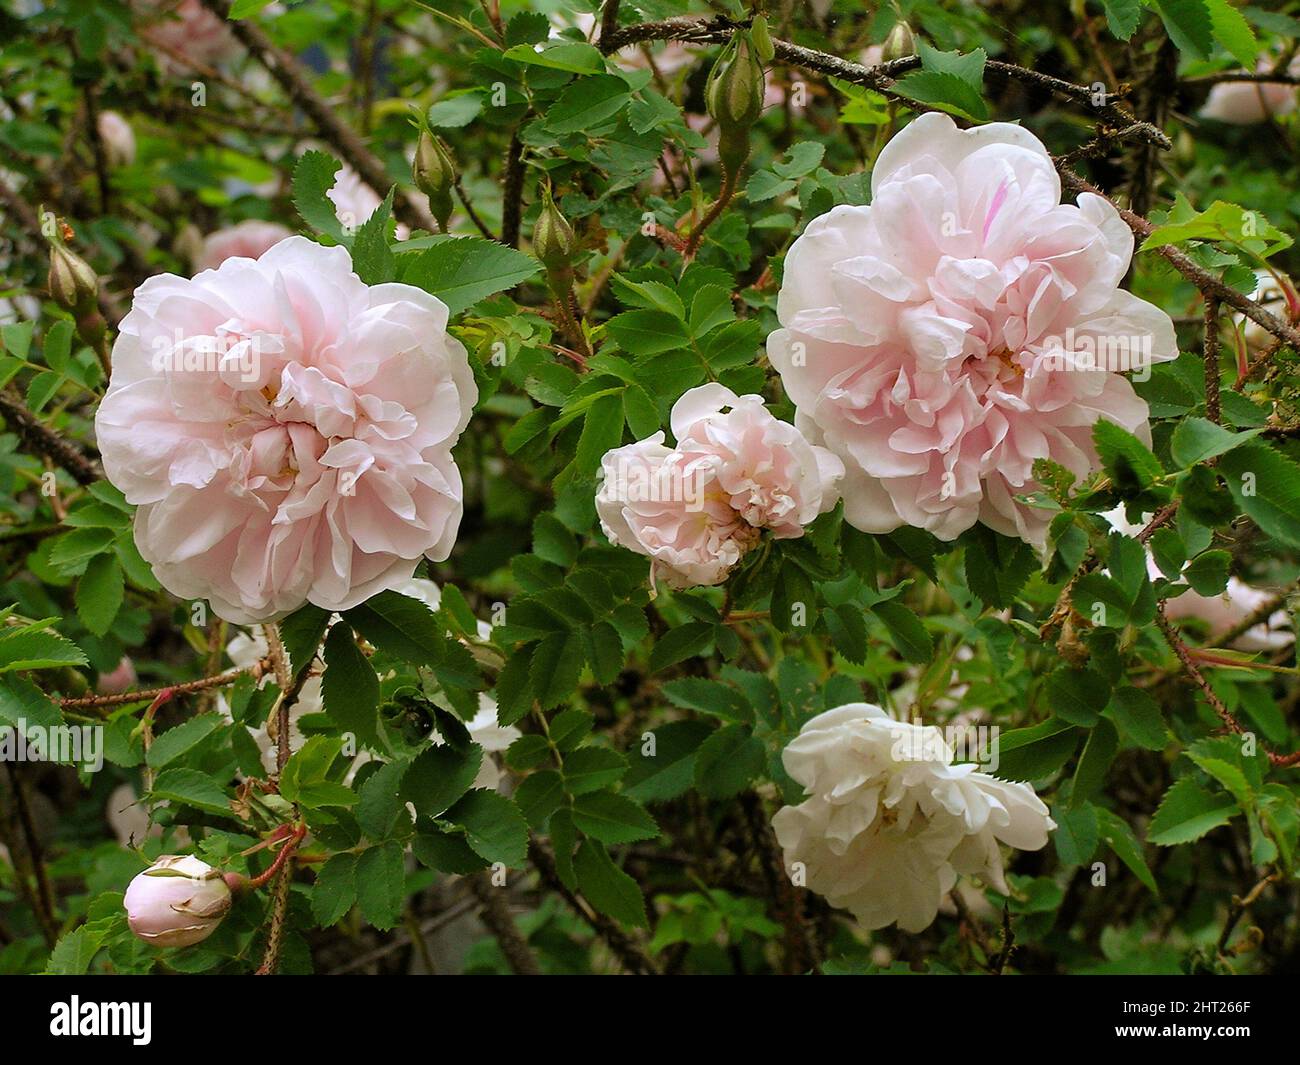 Shrub rose 'Stanwell Perpetual' Stock Photo - Alamy